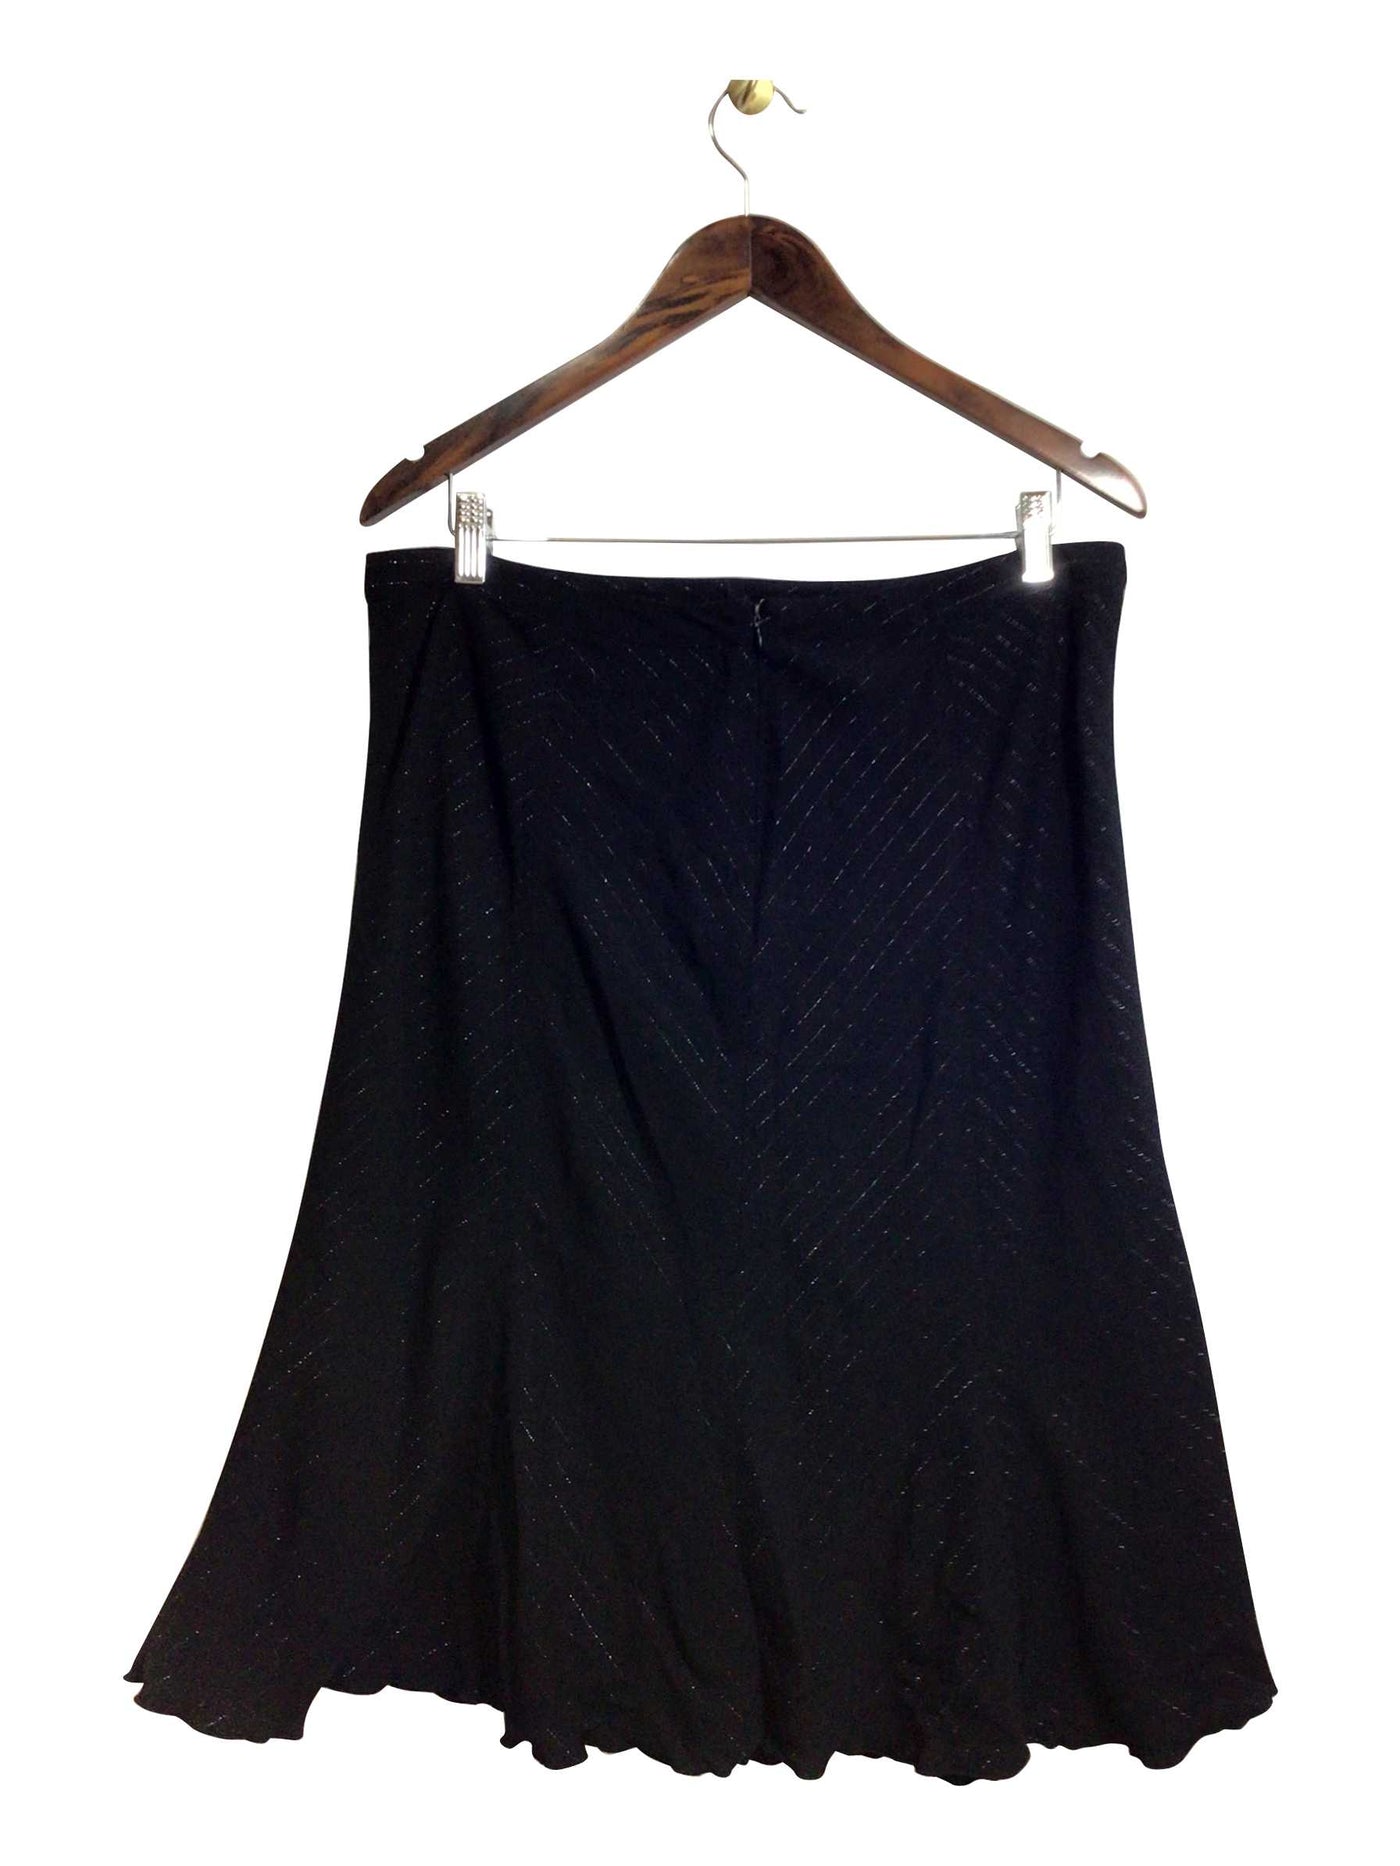 STYLE & CO. Regular fit Skirt in Black - Size 14 | 9.74 $ KOOP